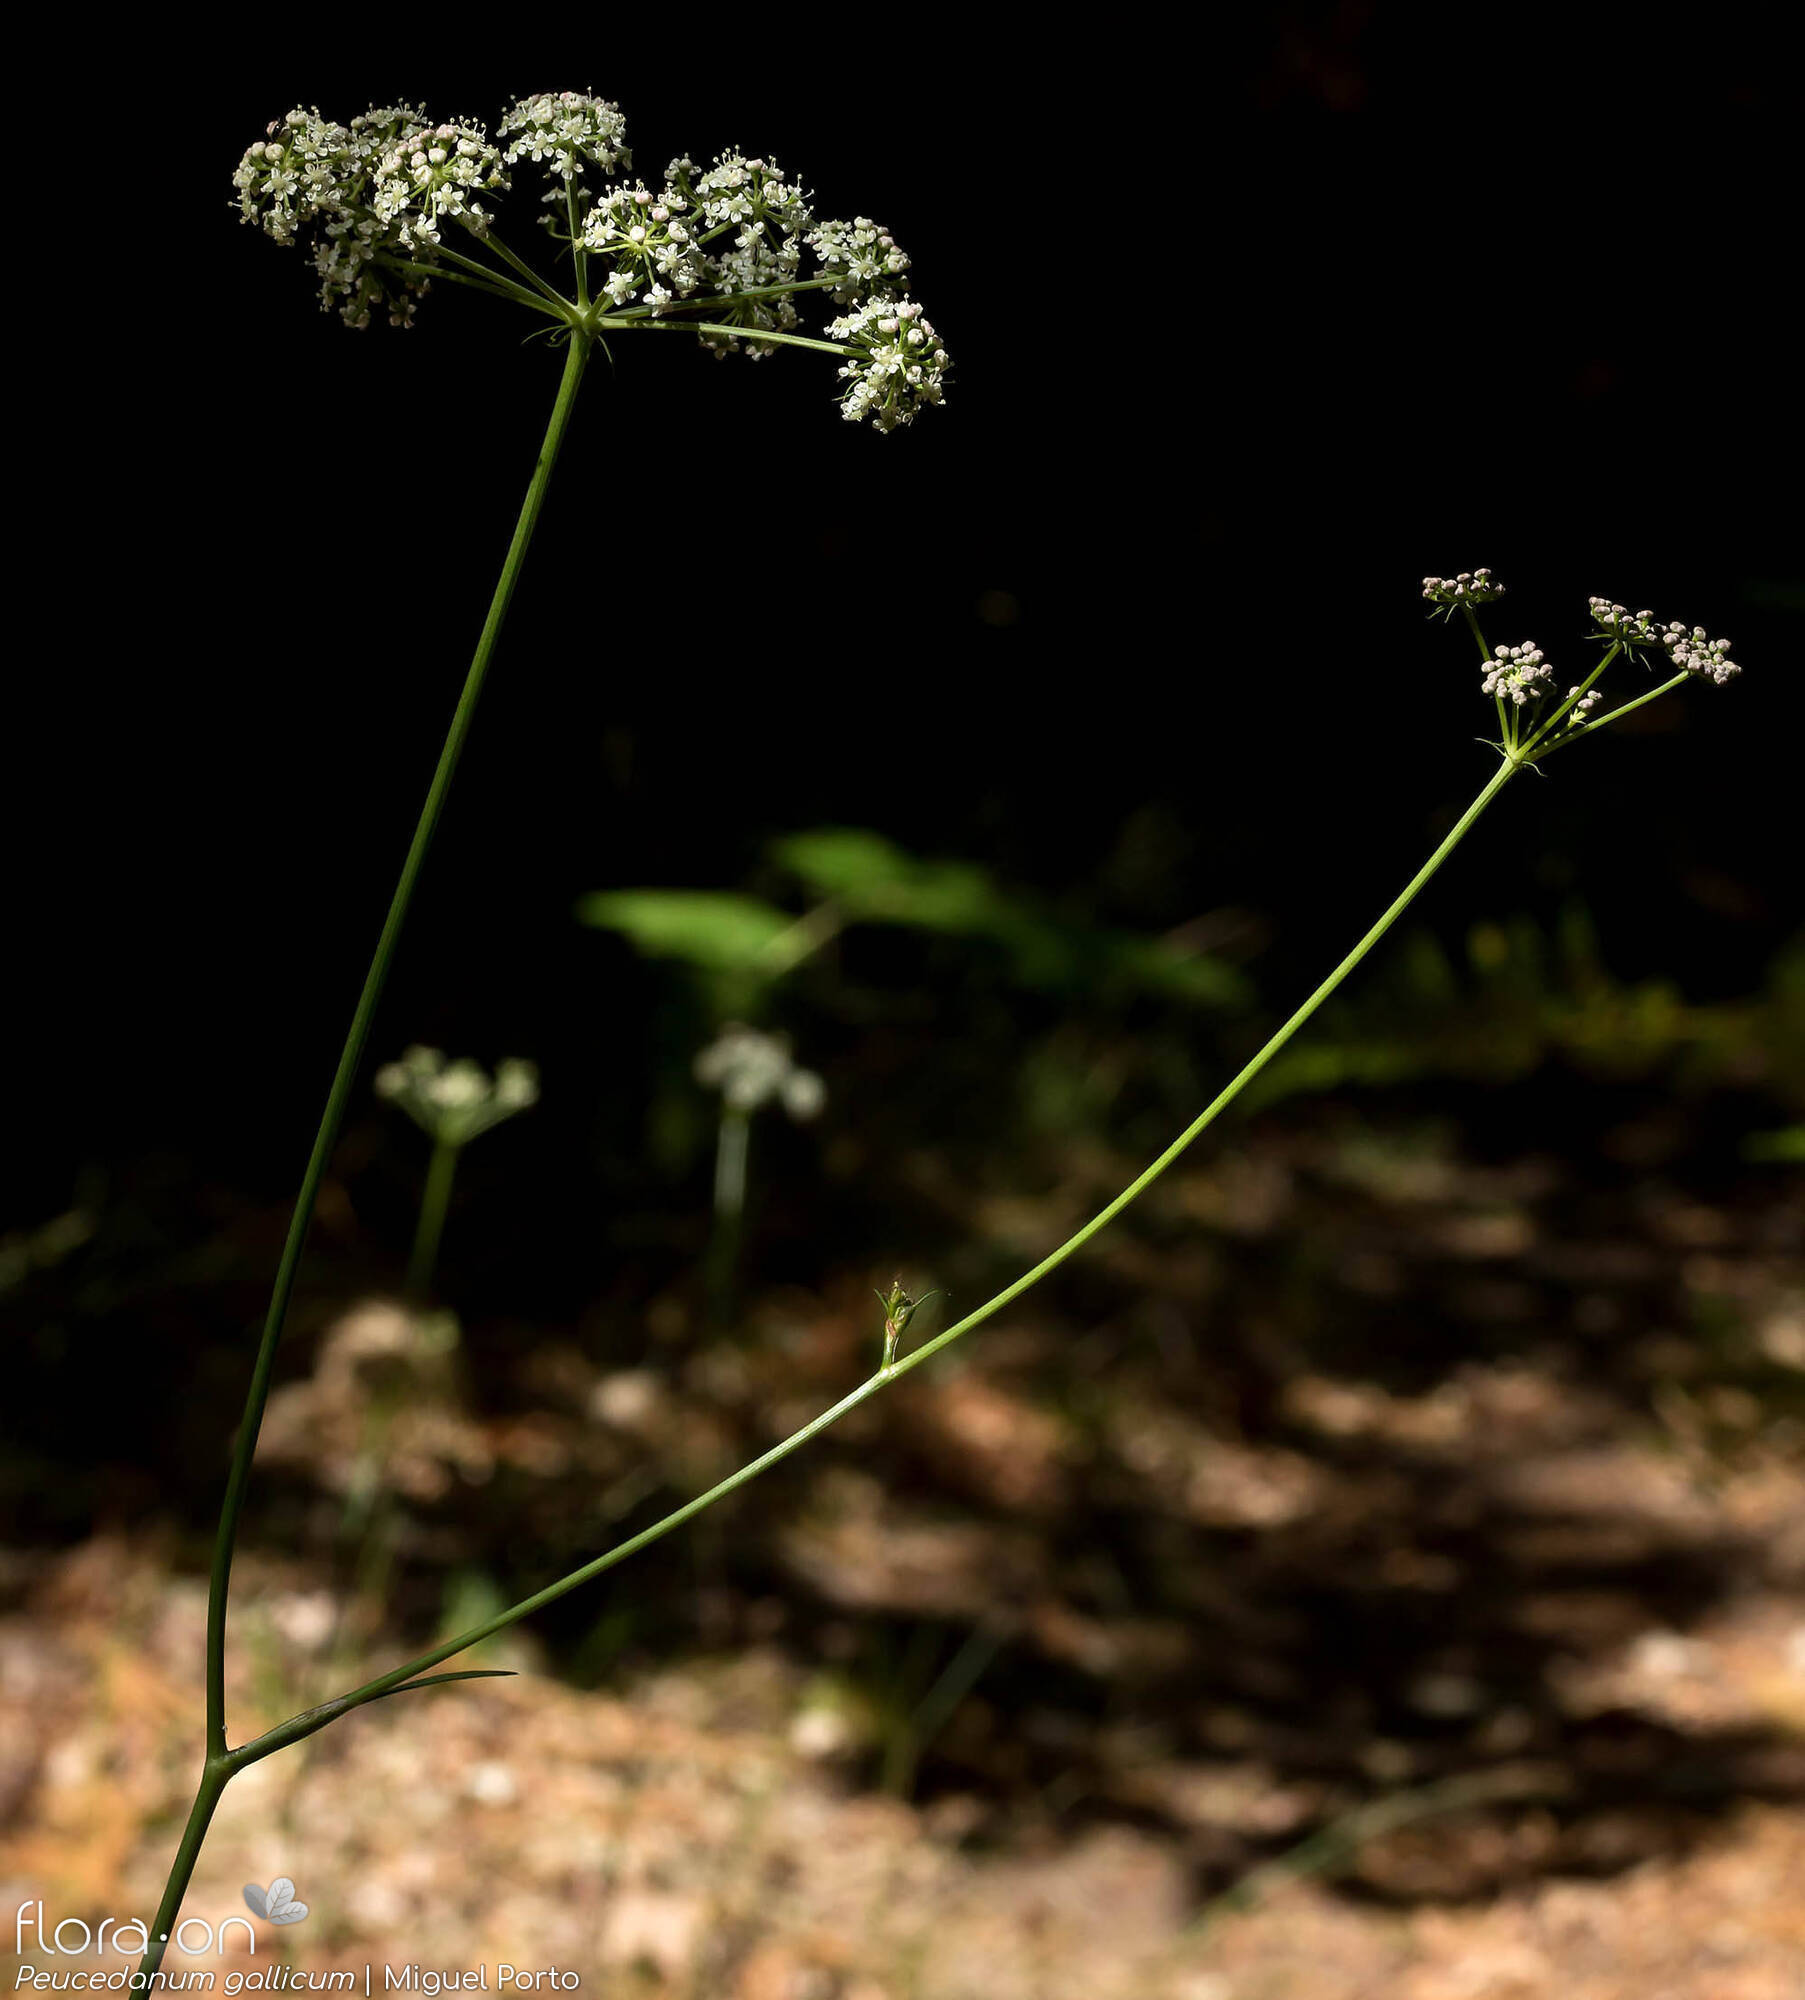 Peucedanum gallicum - Flor (geral) | Miguel Porto; CC BY-NC 4.0